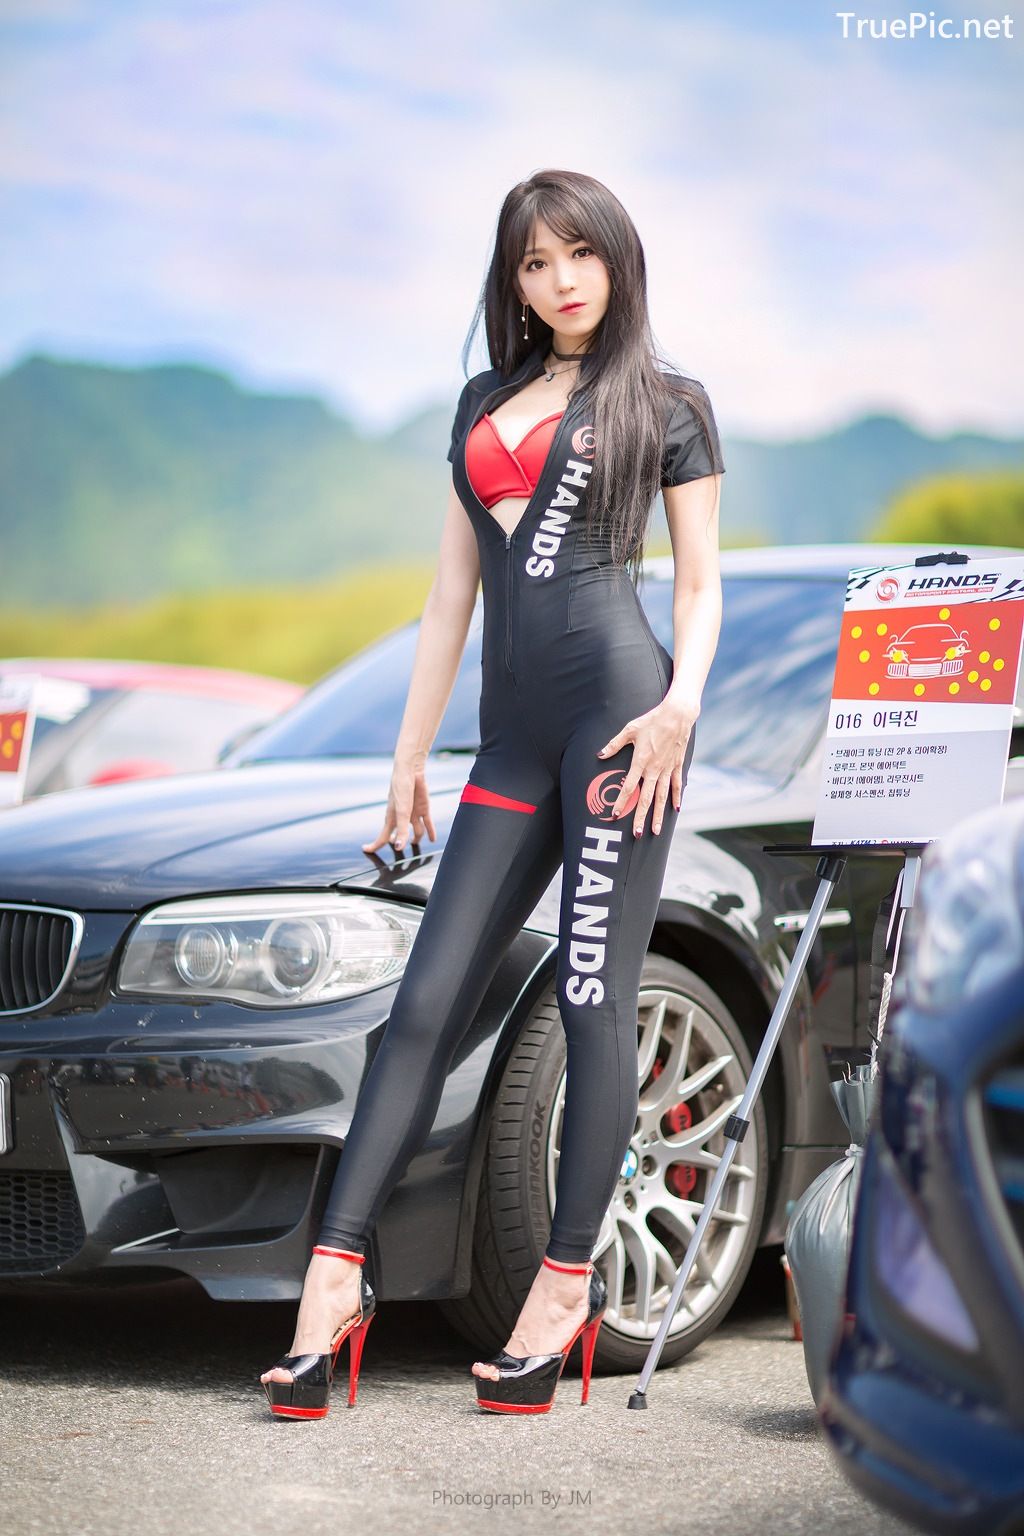 Image-Korean-Racing-Model-Lee-Eun-Hye-At-Incheon-Korea-Tuning-Festival-TruePic.net- Picture-103